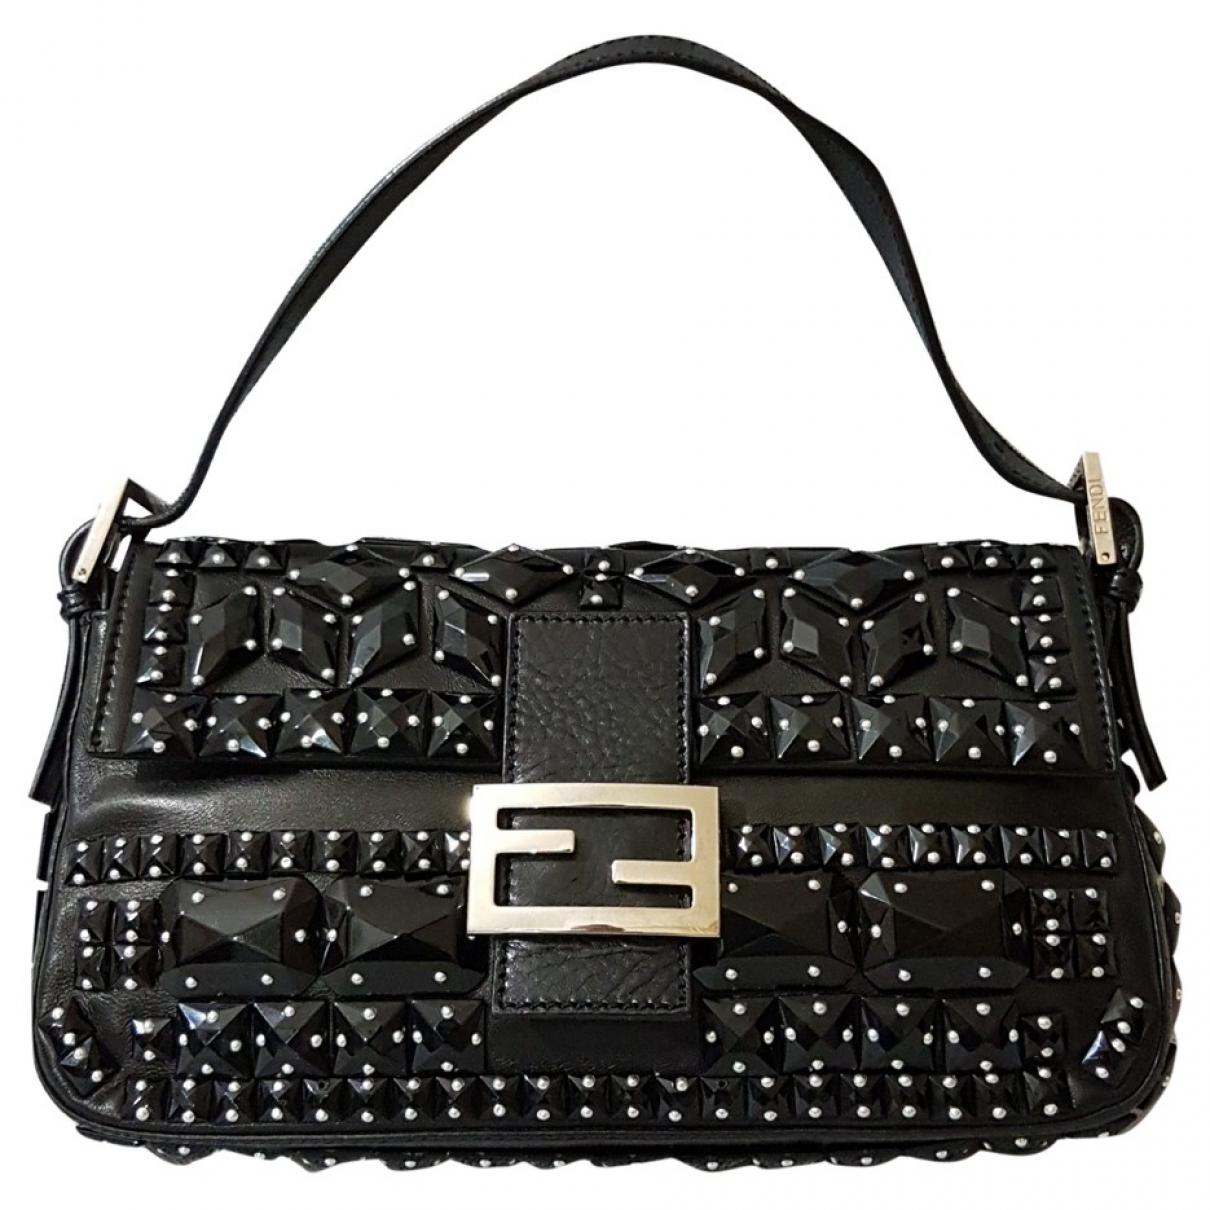 Fendi Baguette Black Leather Handbag in Black - Lyst